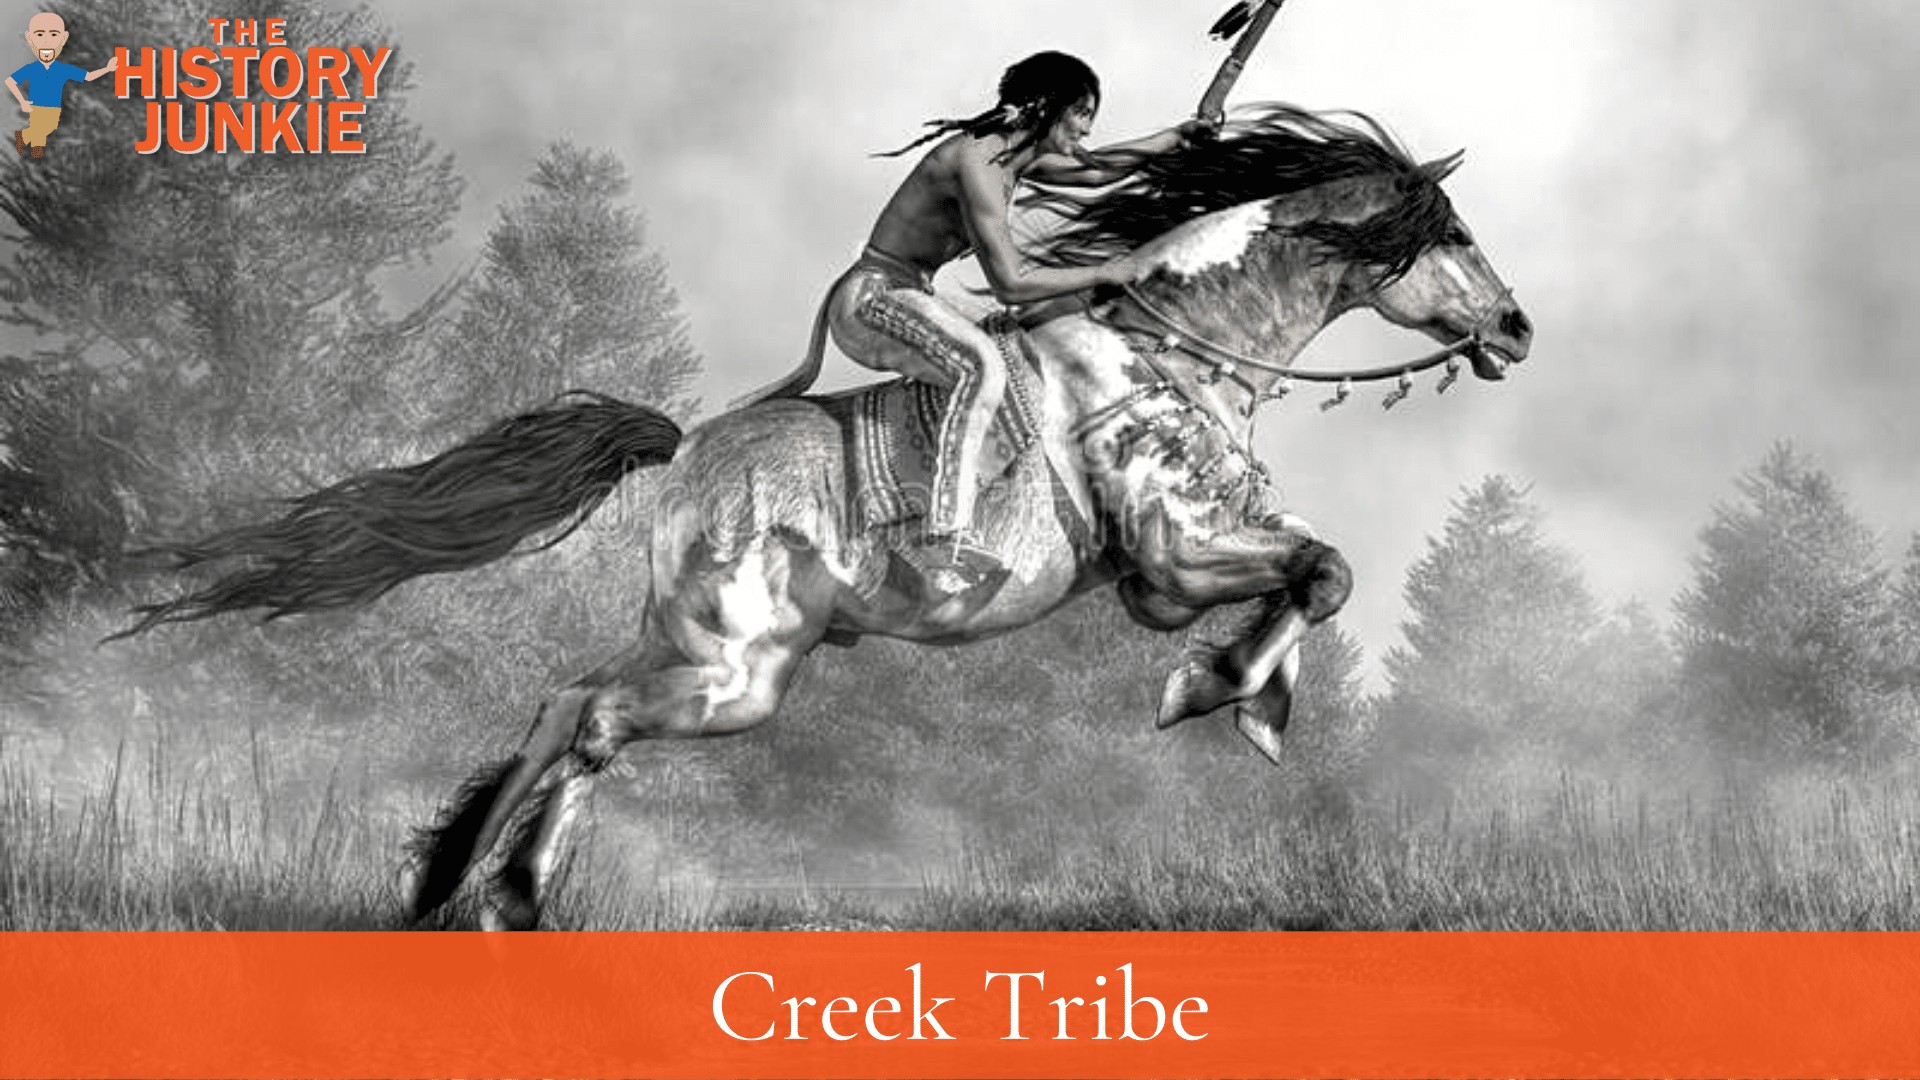 Creek Tribe